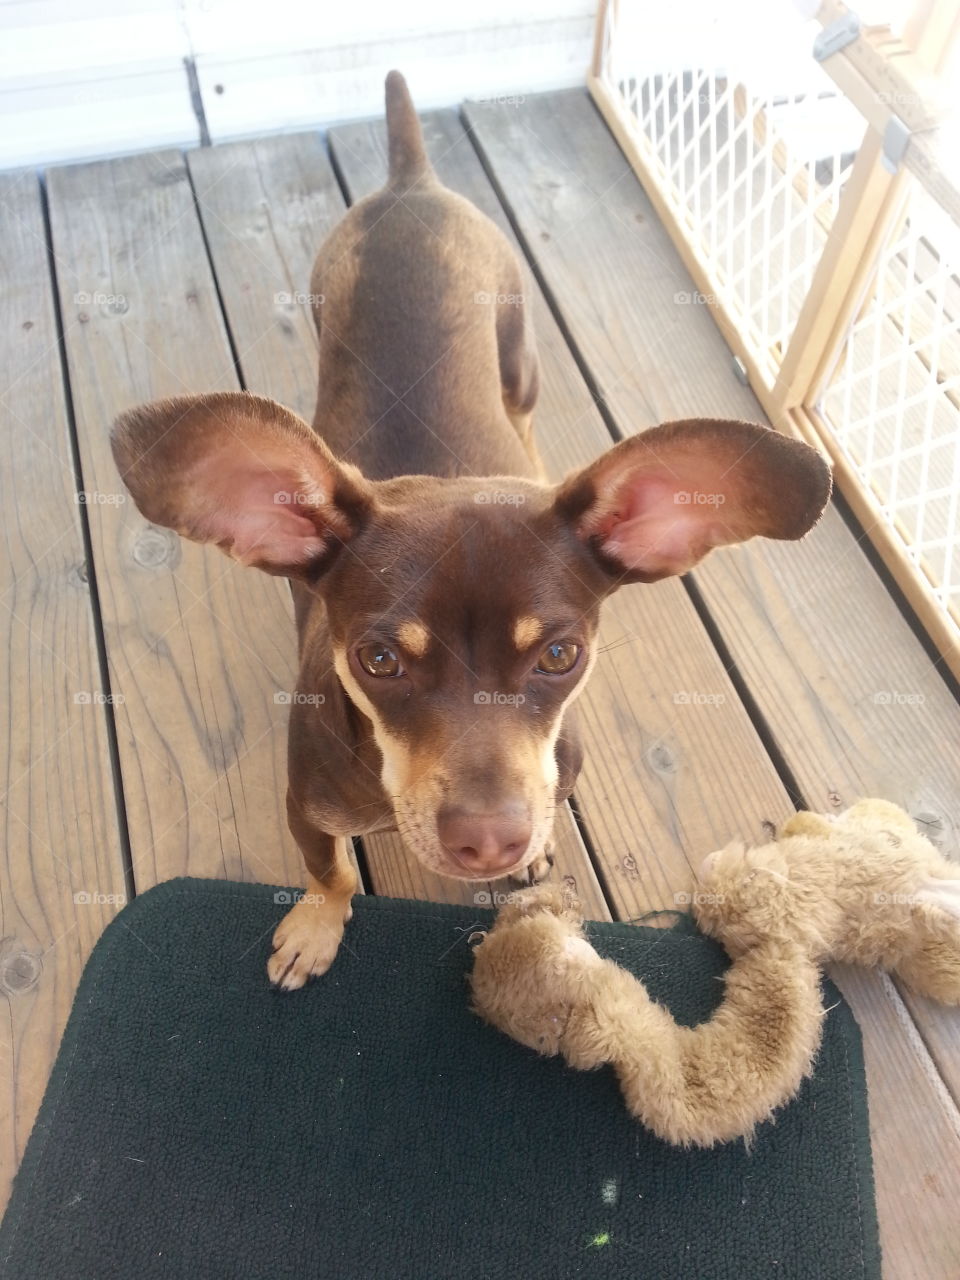 Small dog with big ears